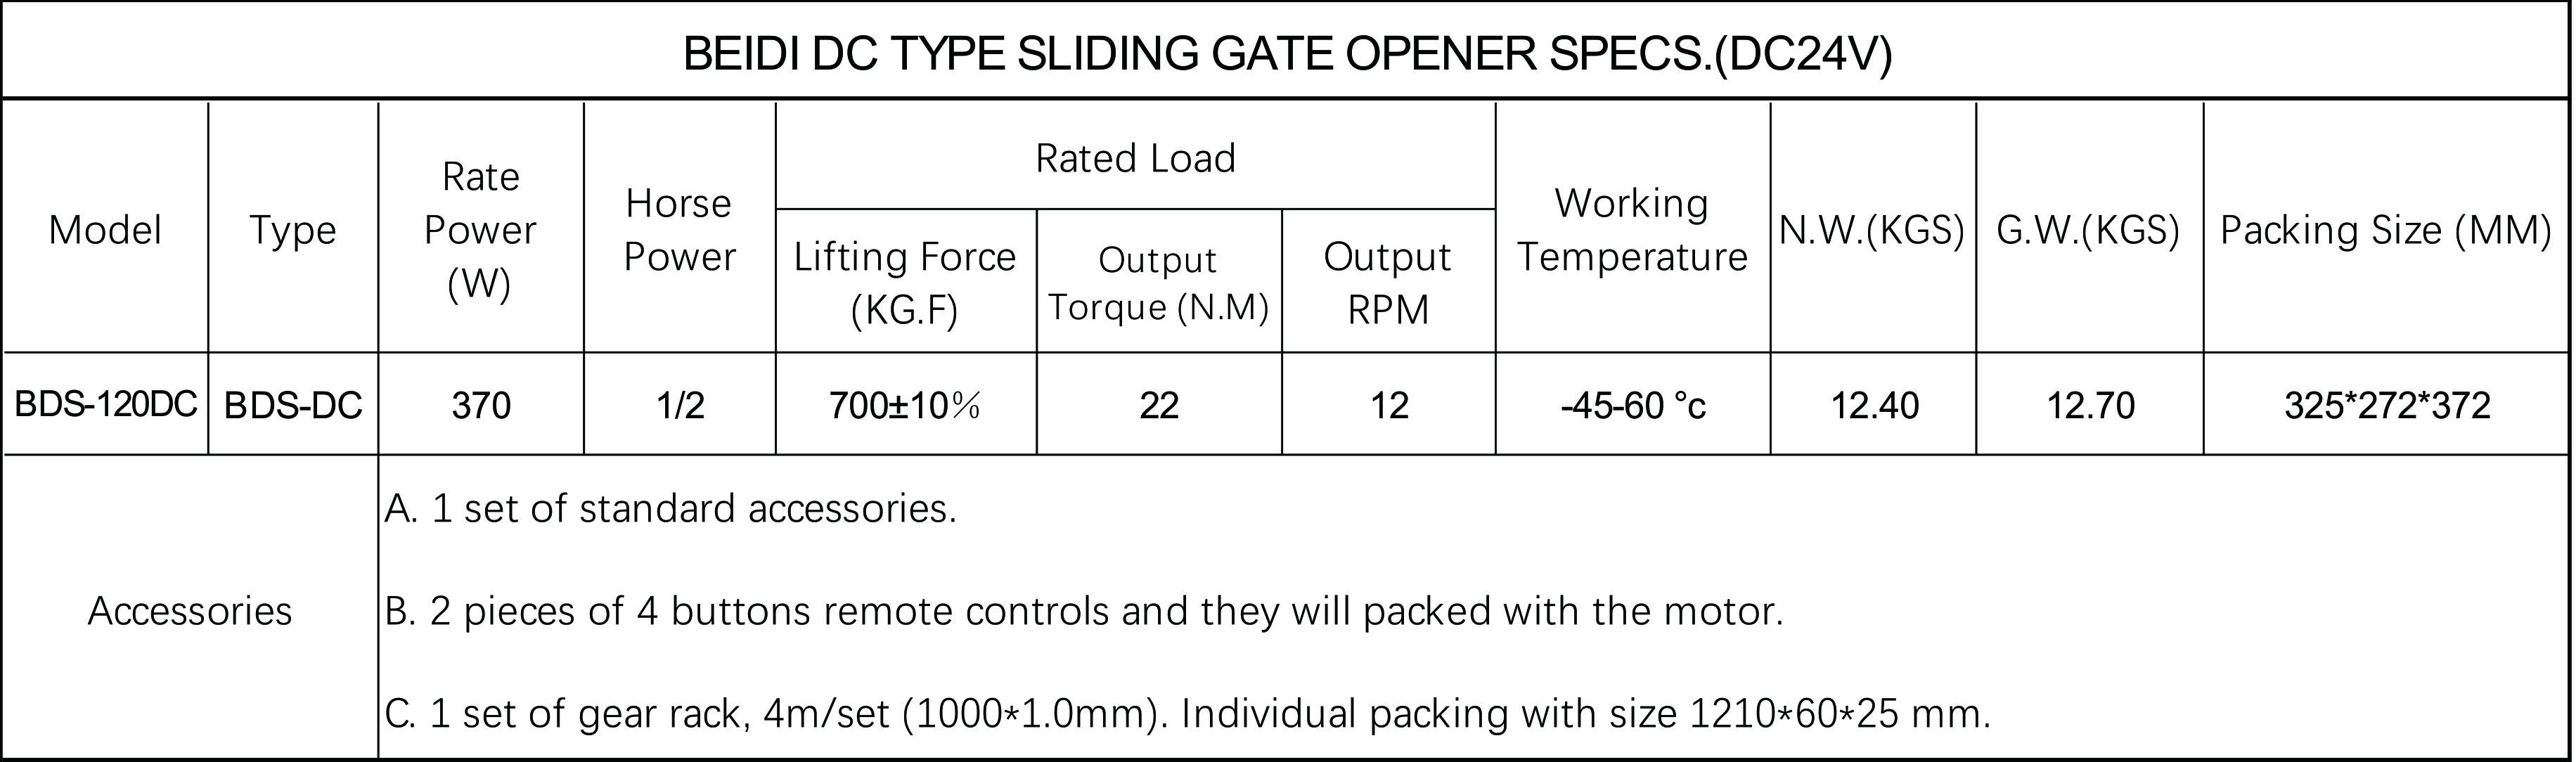 U QUICK DETAILS BDS-120DC DC TYPE SLIDING GATE OPENER